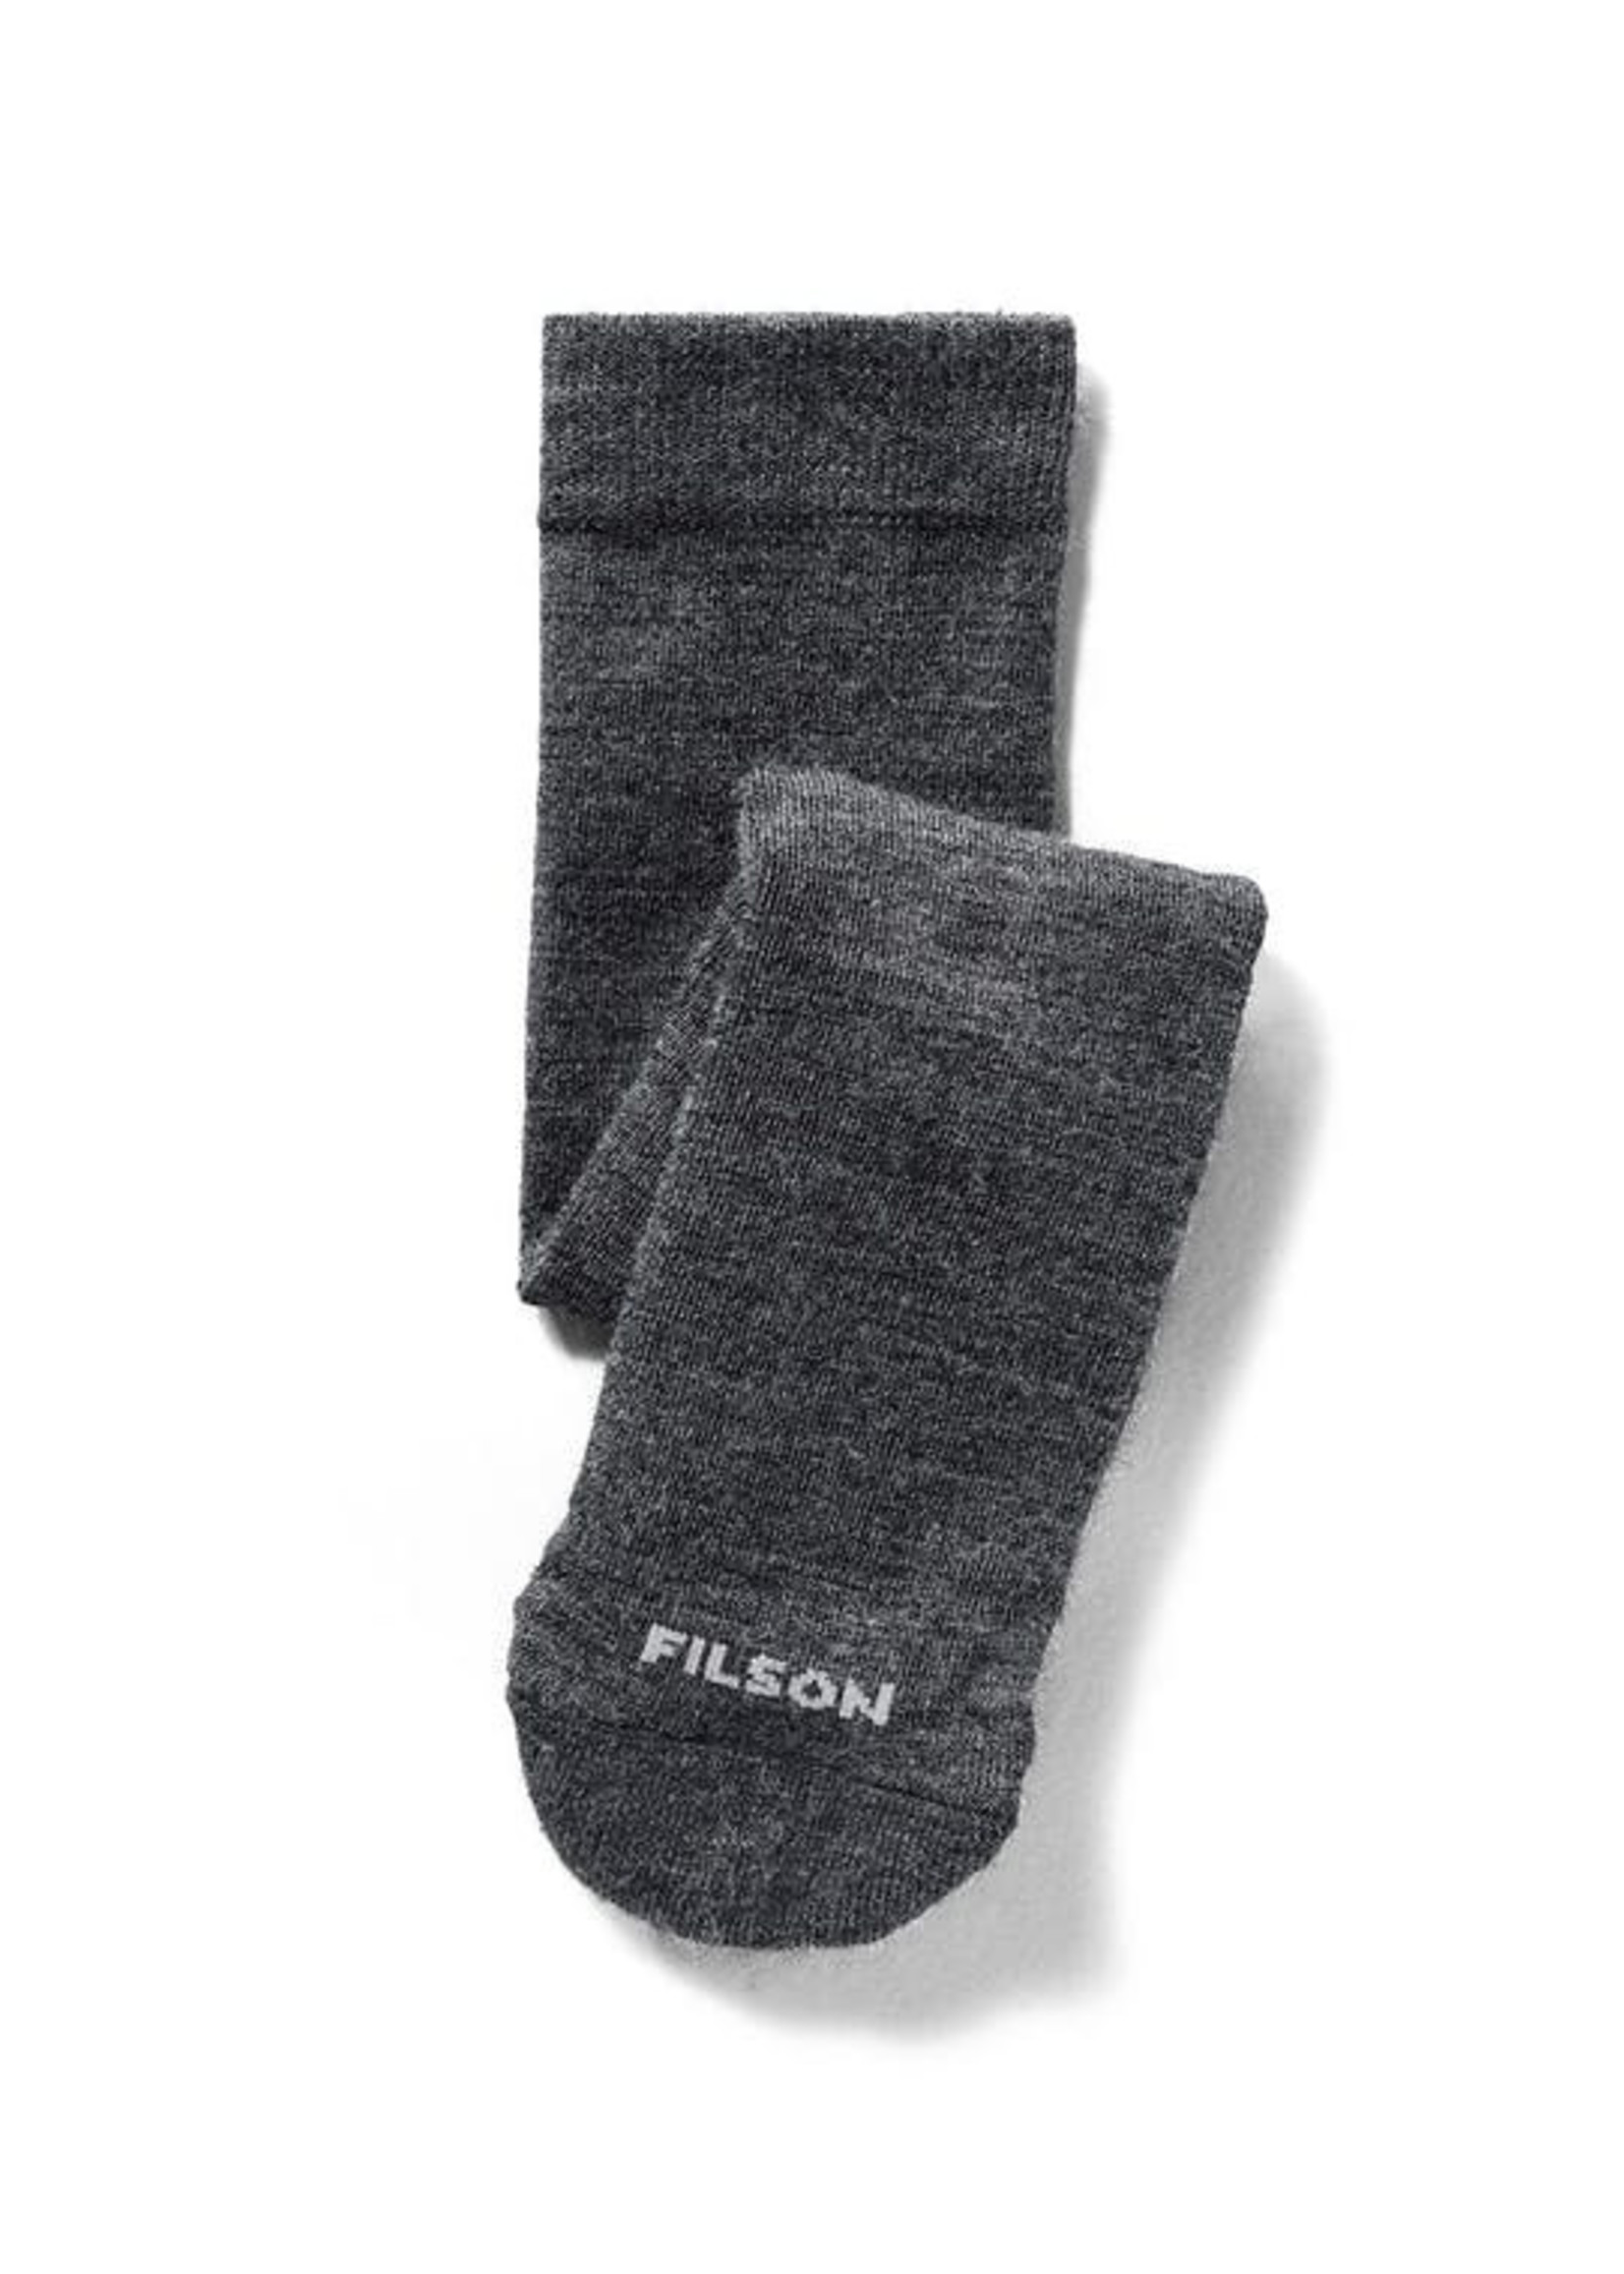 Filson Everyday Crew Sock: Charcoal